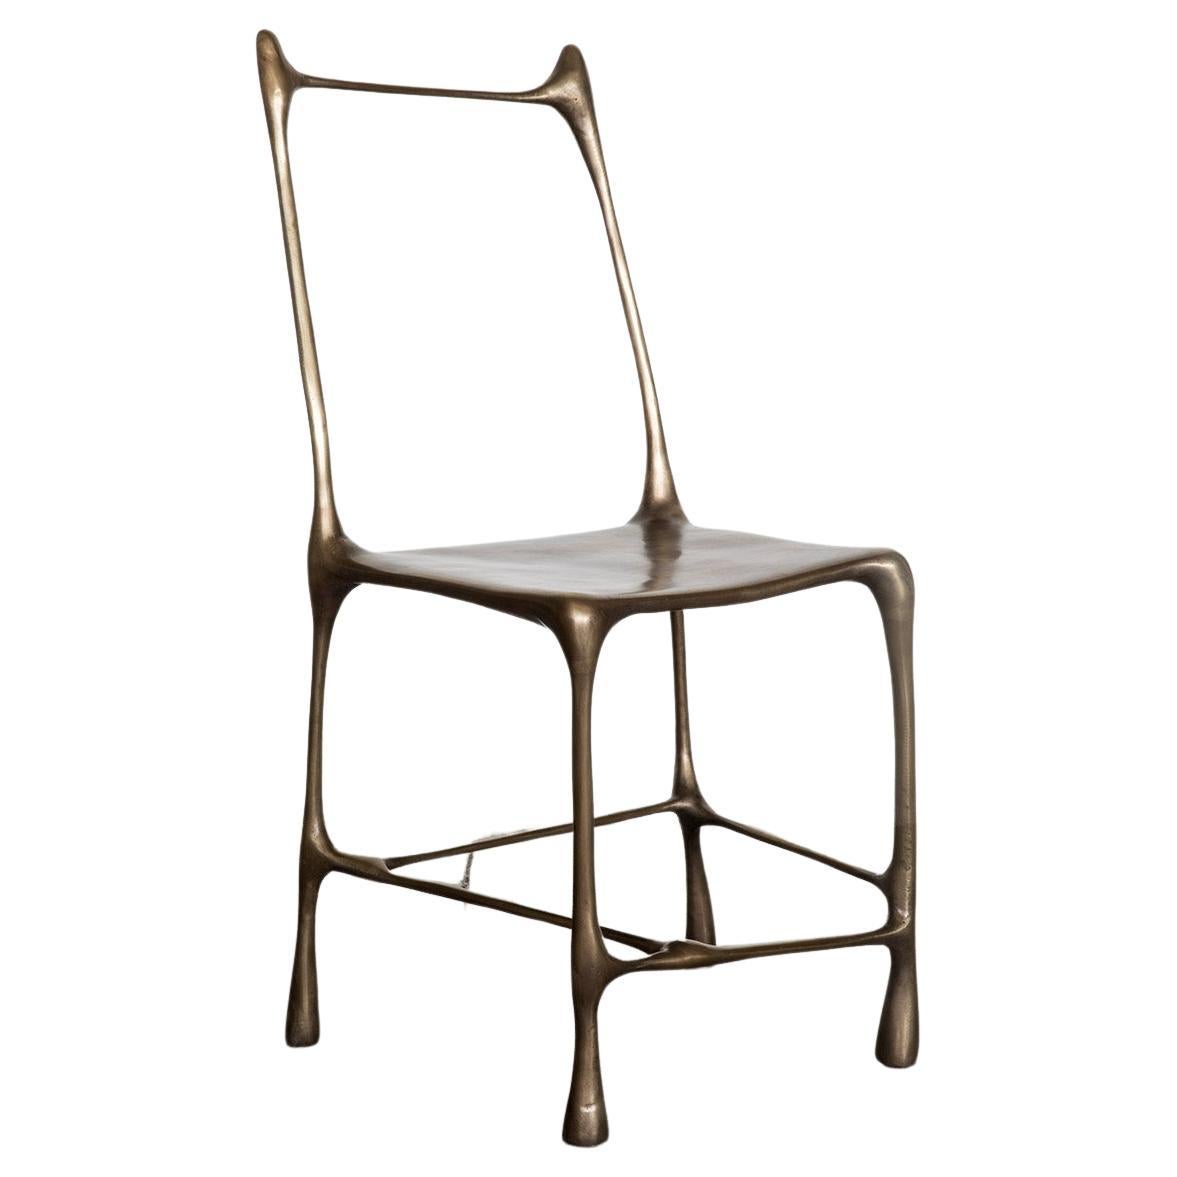 Stilum - Shaped bronze chair For Sale